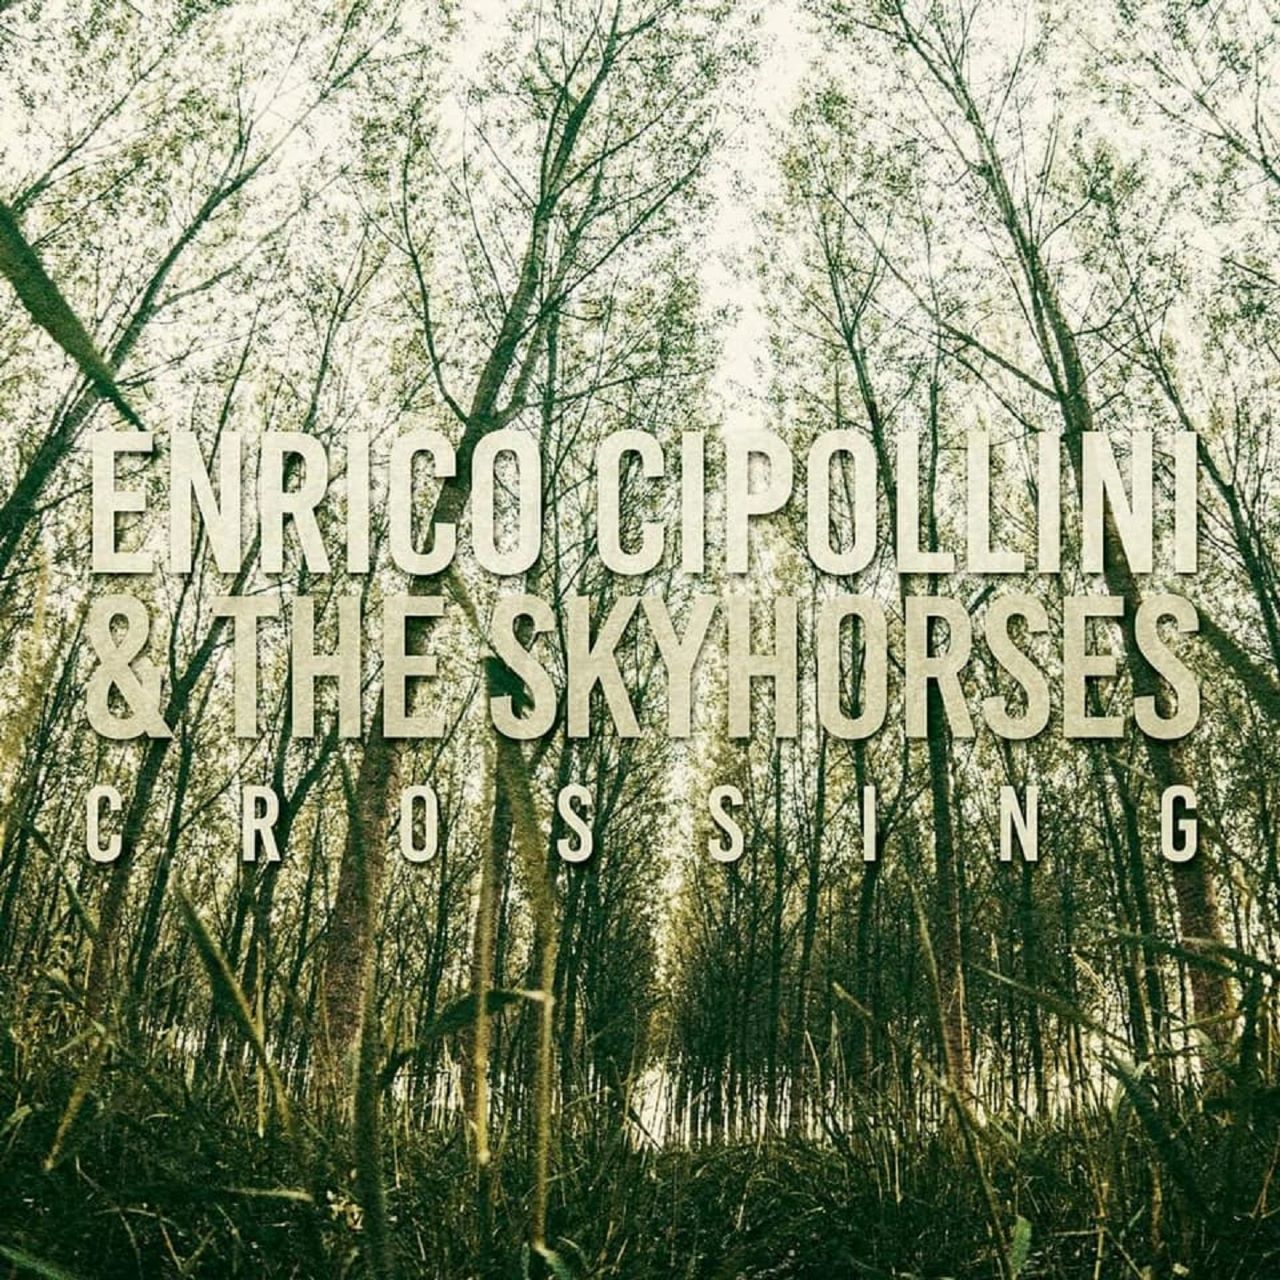 Enrico Cipollini & The Skyhorses – Crossing cover album